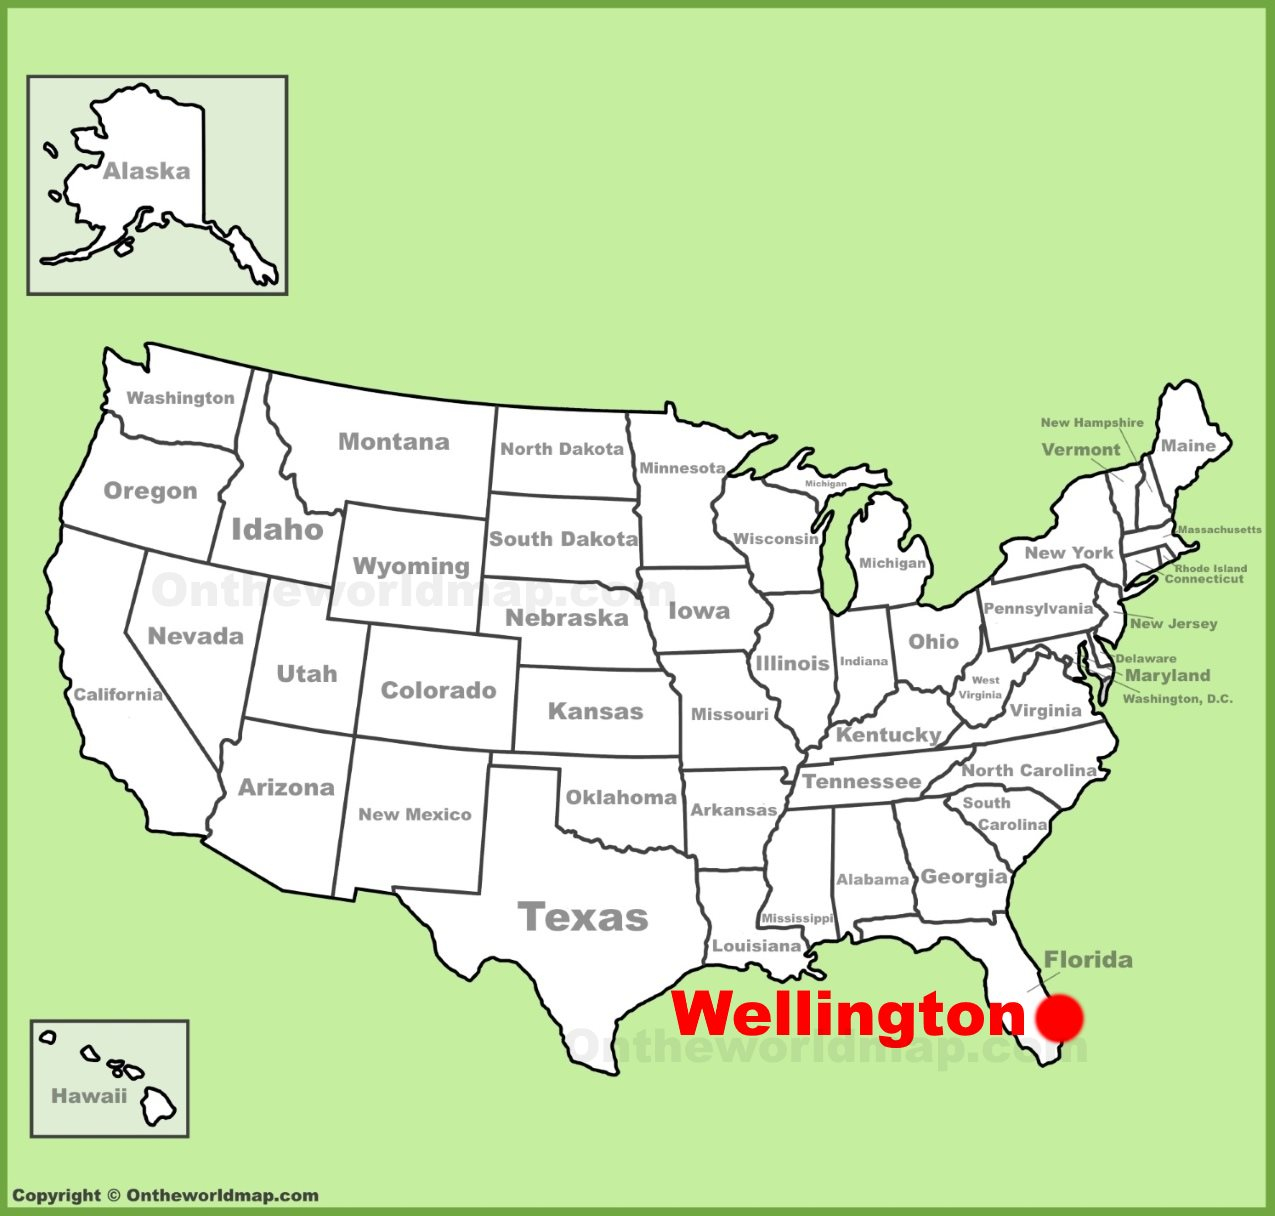 Wellington Location On The U.s. Map - Wellington Florida Map